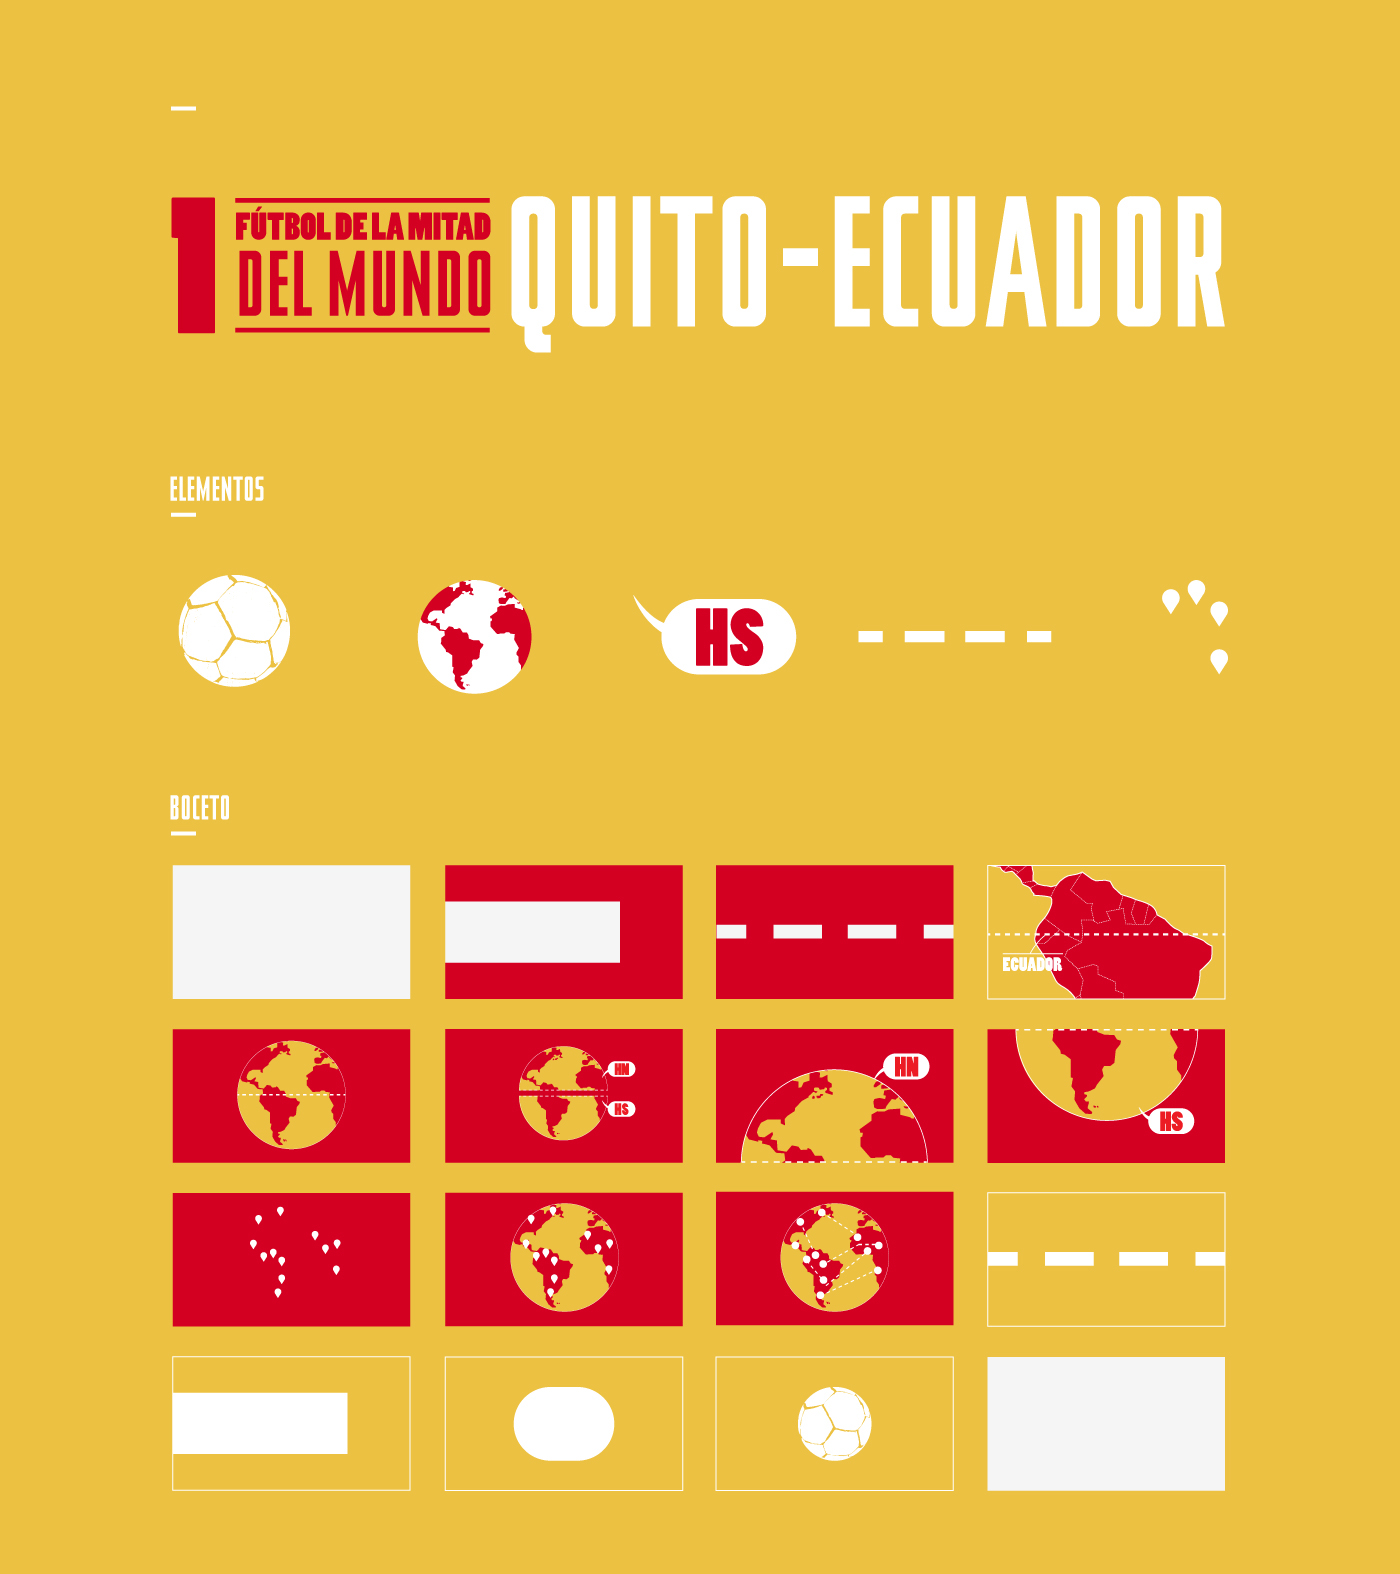 Coca Cola coke mundial football world cup ilustration Ecuador Republica Dominicana football Futbol